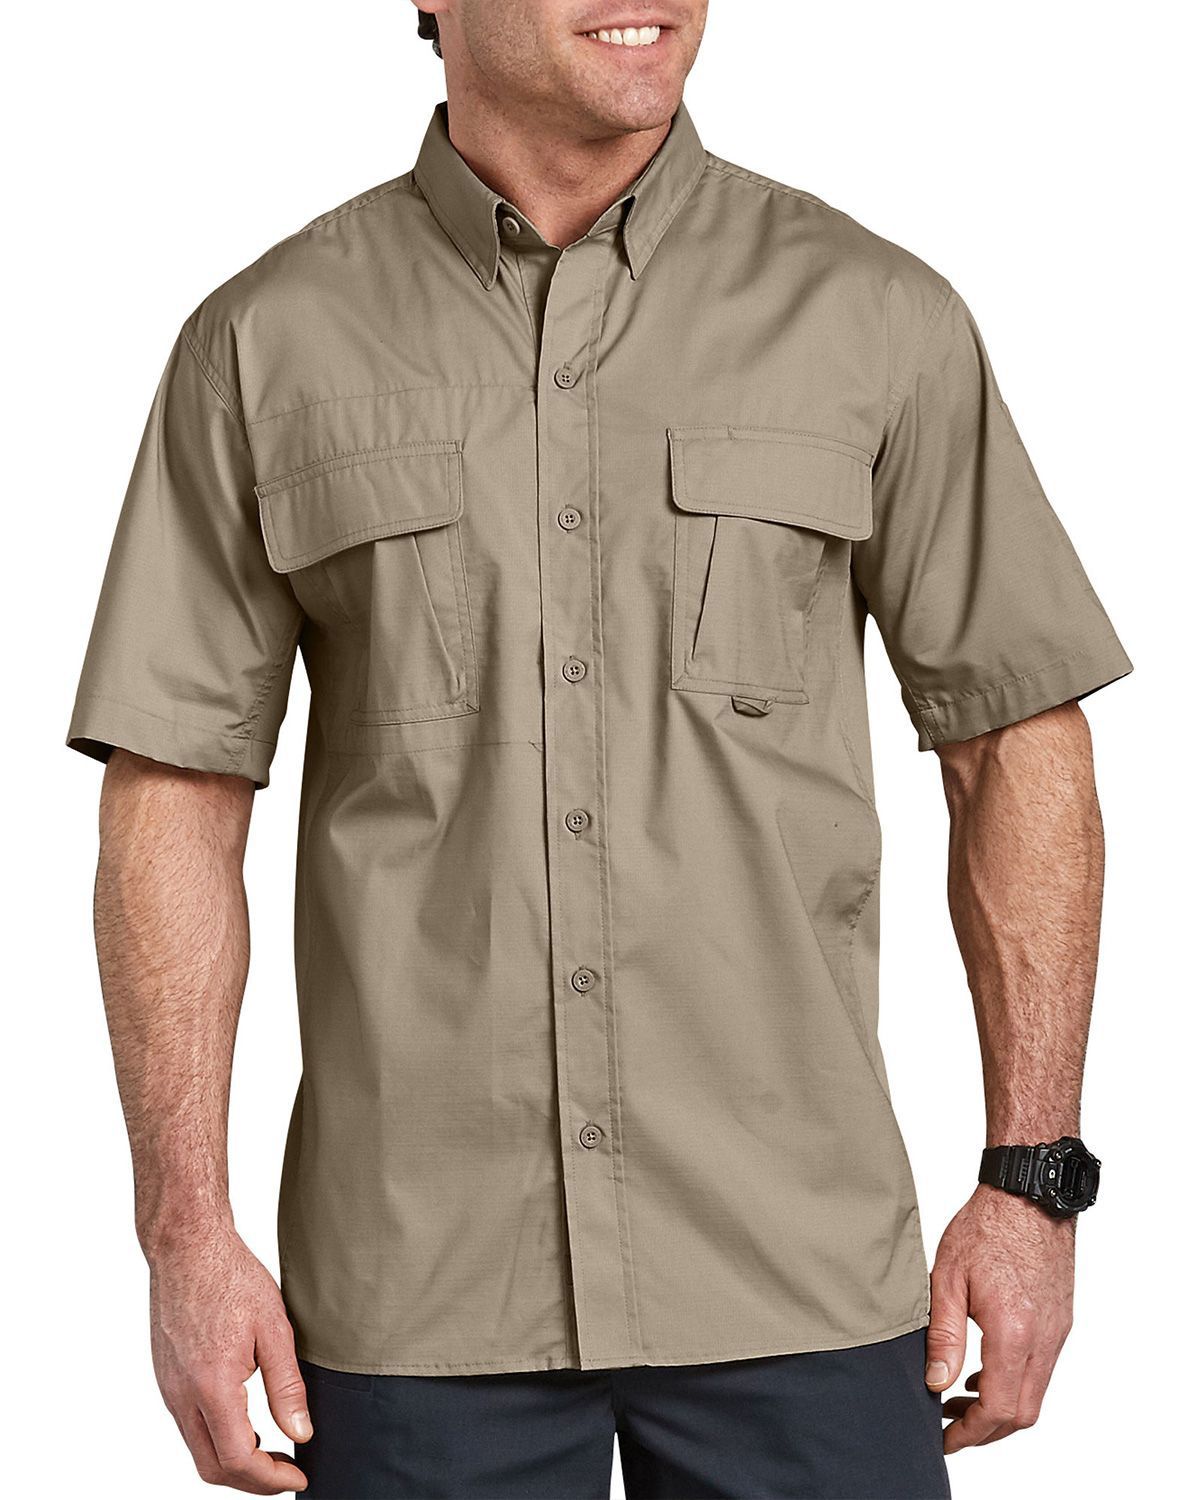 Dickies LS953 4.5 oz. Ripstop Ventilated Tactical Shirt - ApparelnBags.com